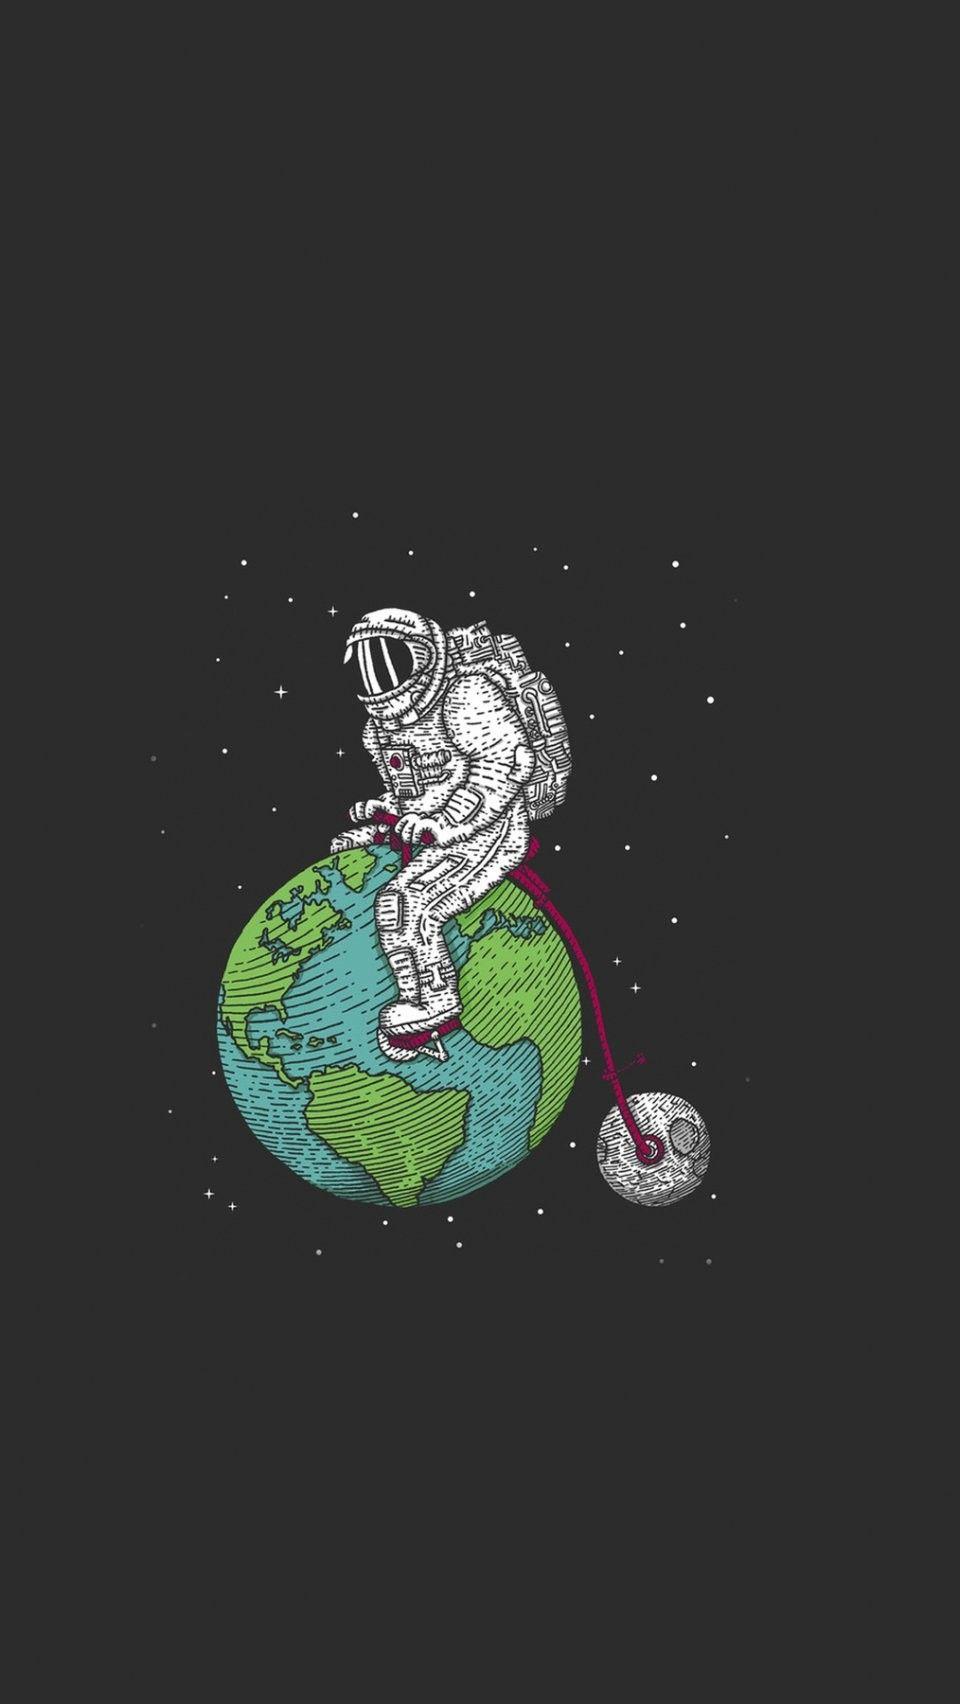 Astronaut spacesuit, gulf, stars, moon, earth, planets, moon, biking